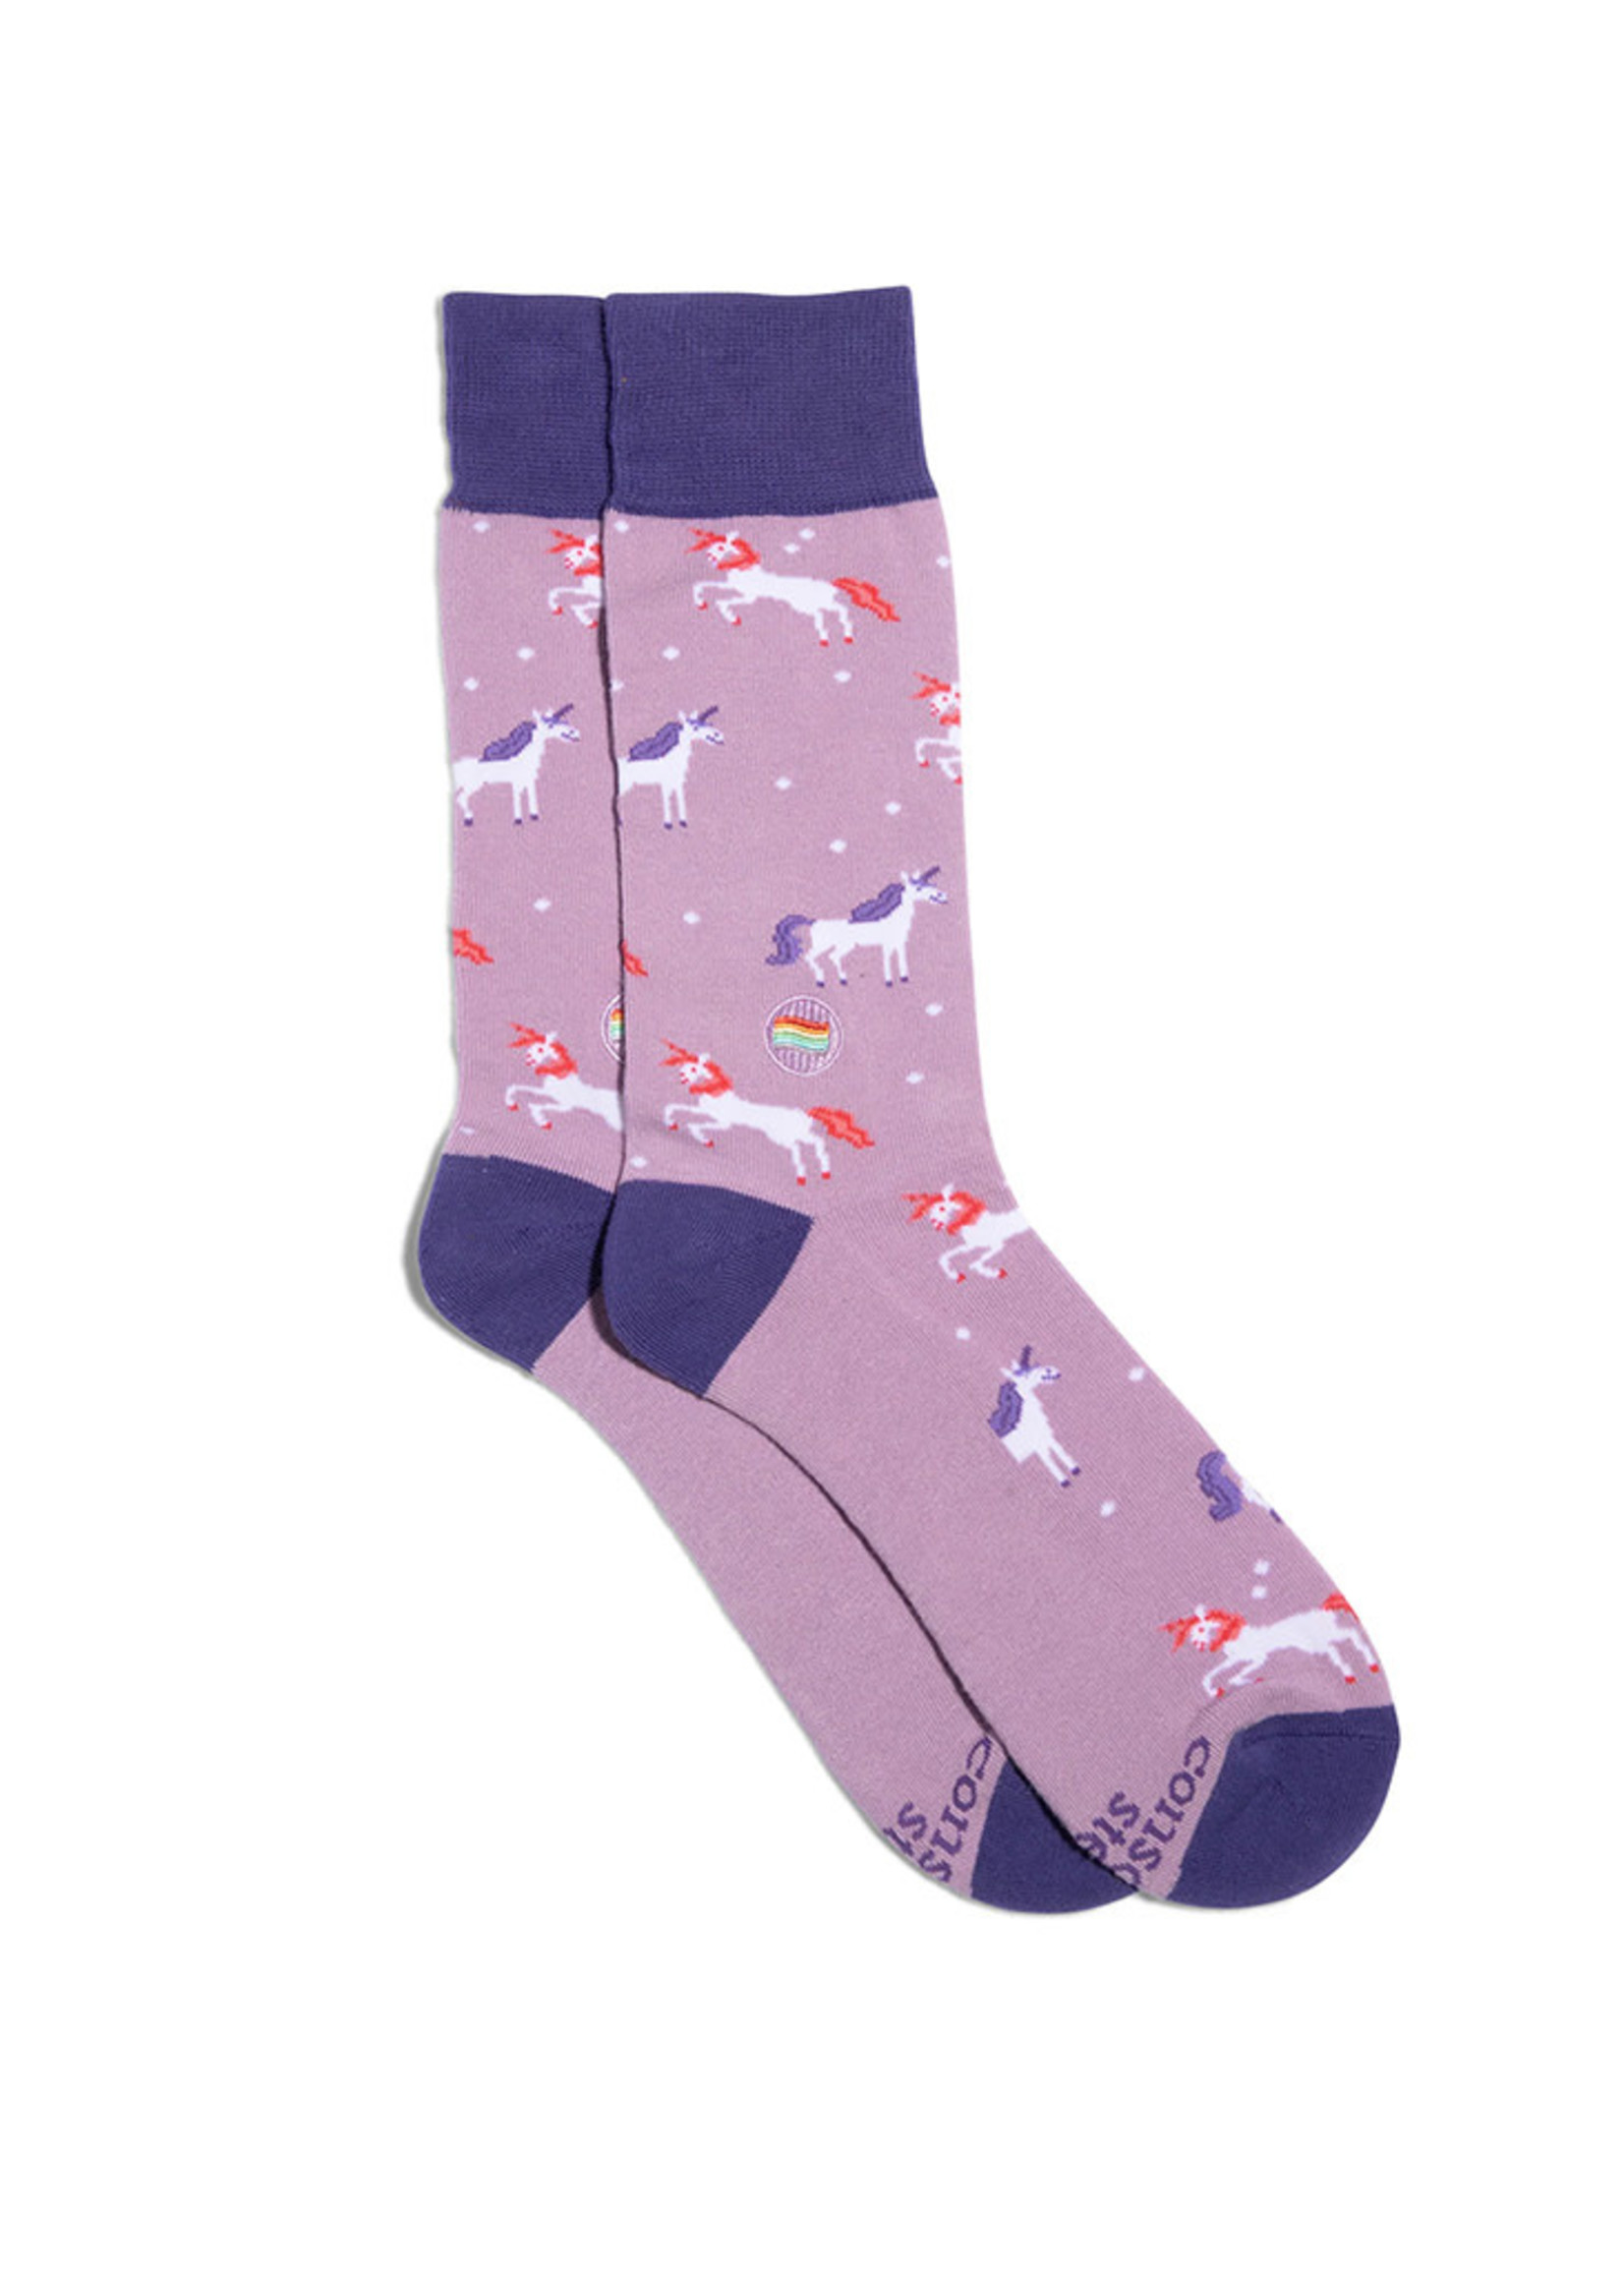 Conscious Step Women's Unicorn Socks That Support LGBTQ